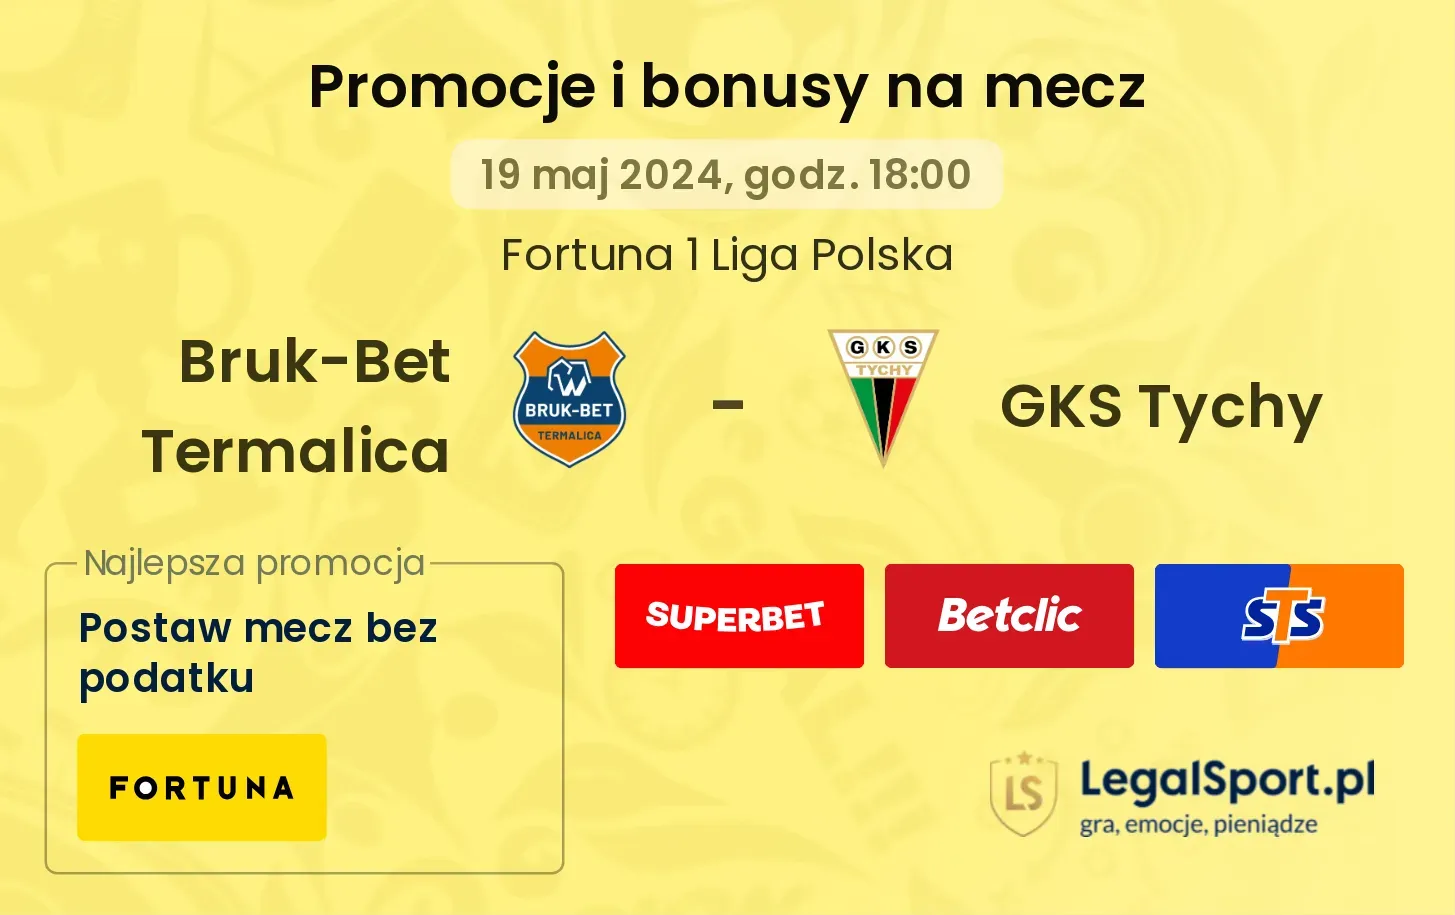 Bruk-Bet Termalica - GKS Tychy bonusy i promocje (19.05, 18:00)